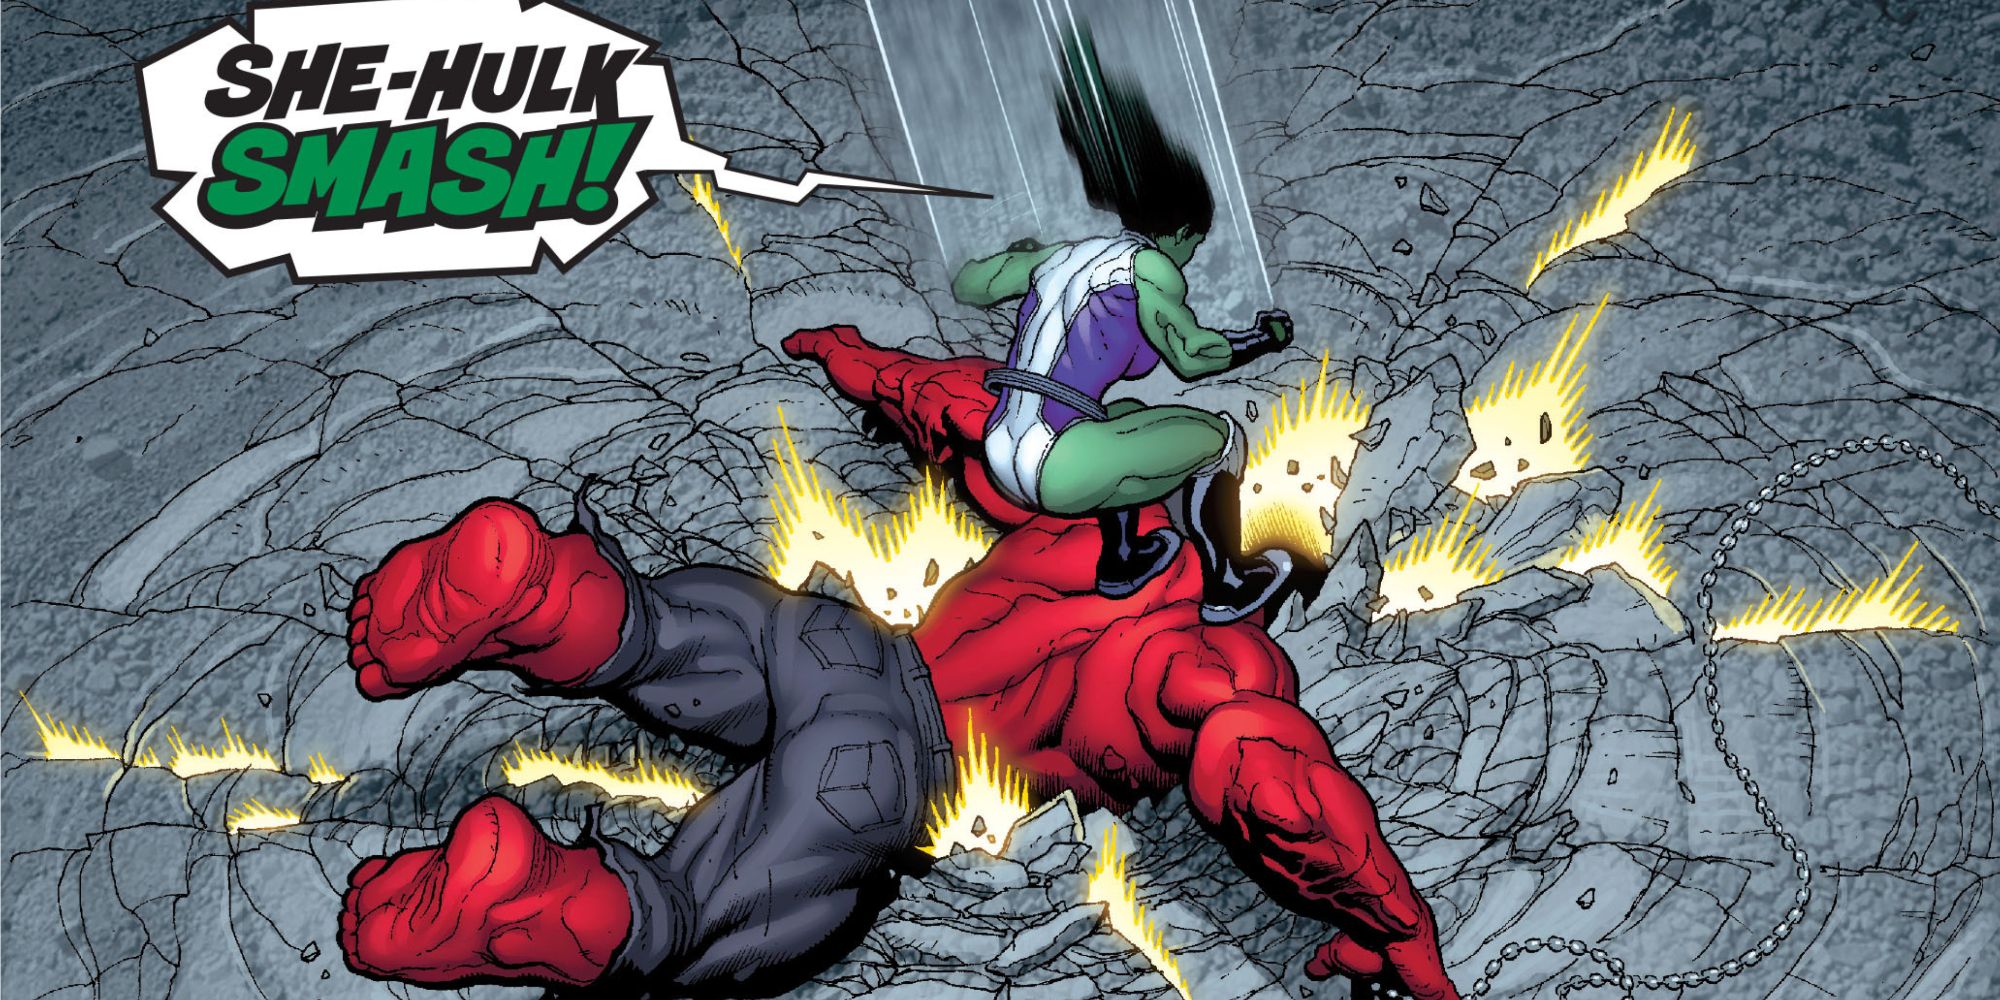 She-Hulk smashes into Red Hulk in Marvel Comics.